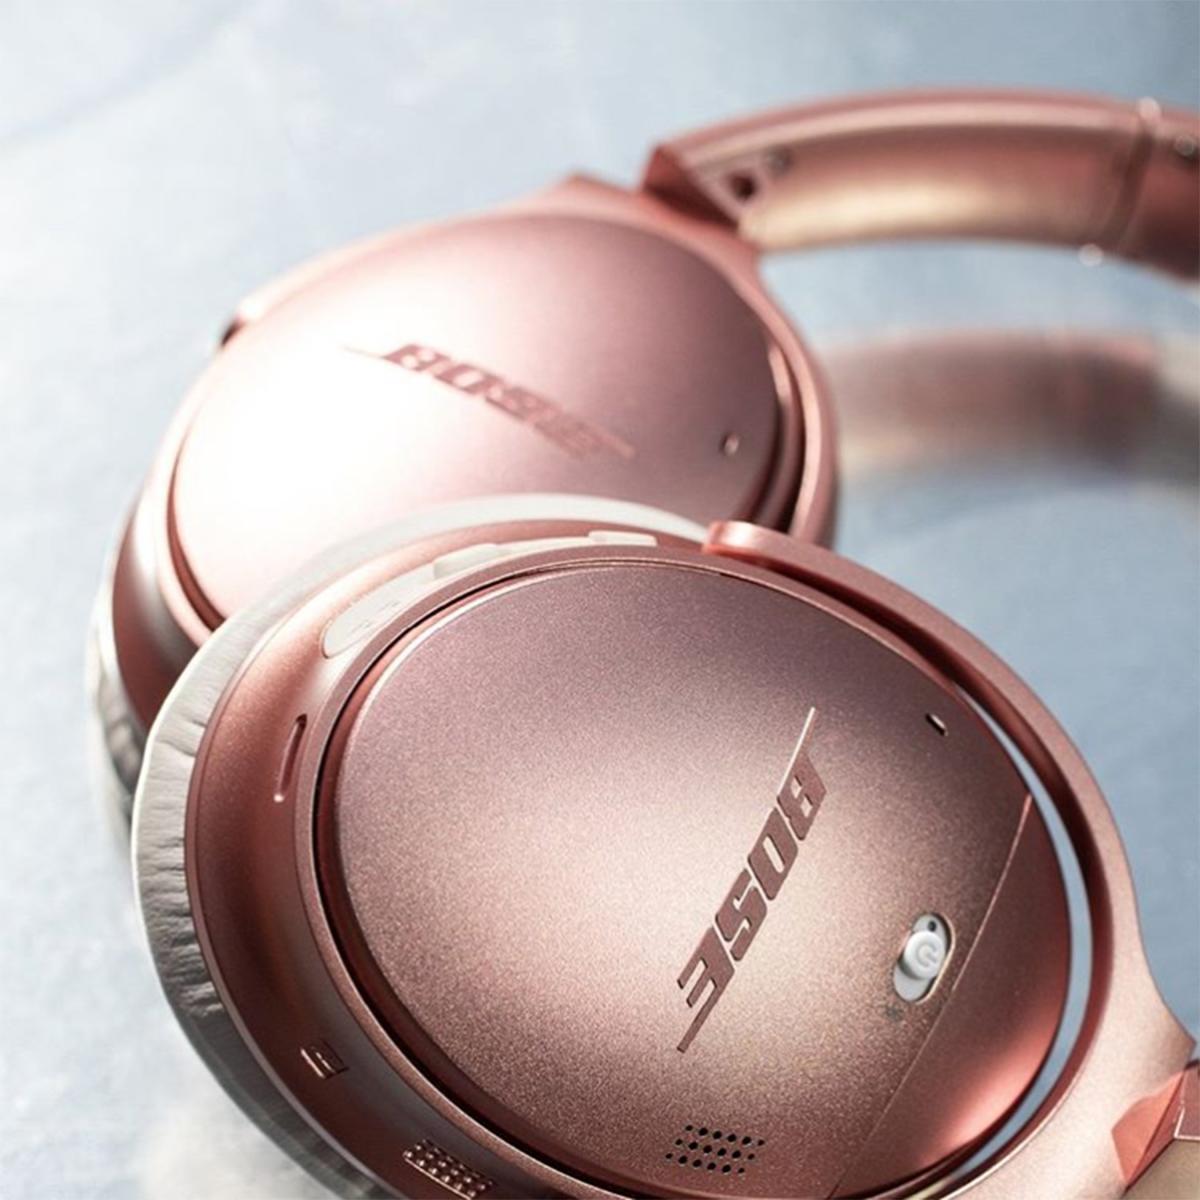 Bose QuietComfort 35 Wireless Headphones II Rose Gold Limited Noise  Canceling